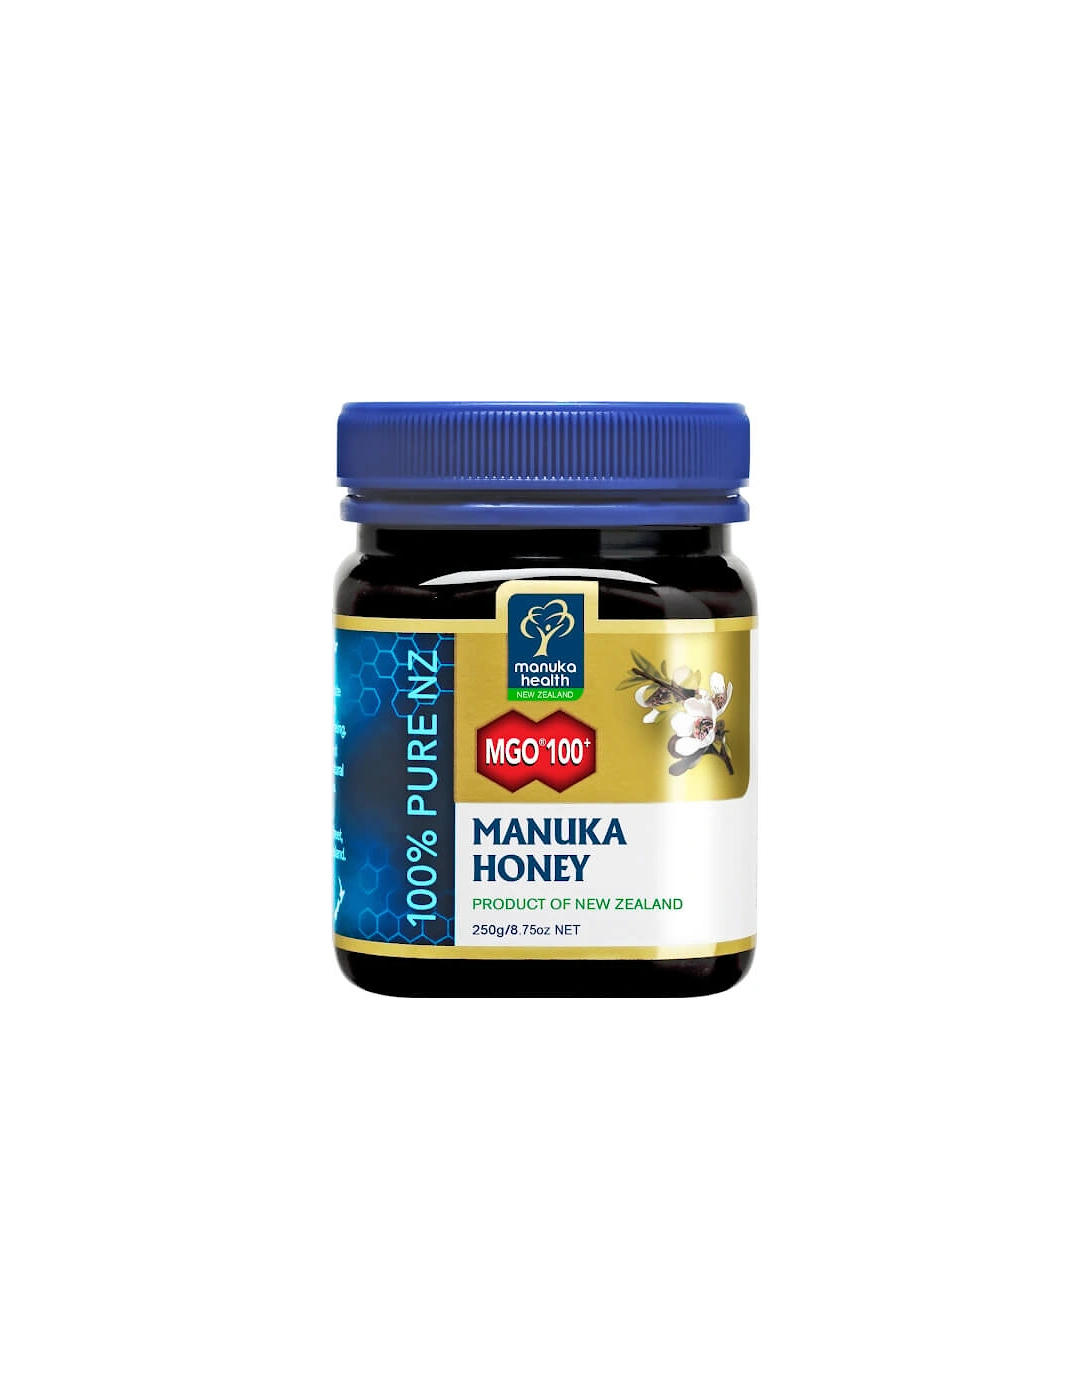 Health MGO 100+ Pure Monofloral Honey Blend 250g - Health New Zealand Ltd - Health MGO 100+ Pure Monofloral Honey Blend 250g - Health MGO 100+ Pure Monofloral Honey 500g - Health MGO 100+ Pure Monofloral Honey Family Jar 1kg, 2 of 1